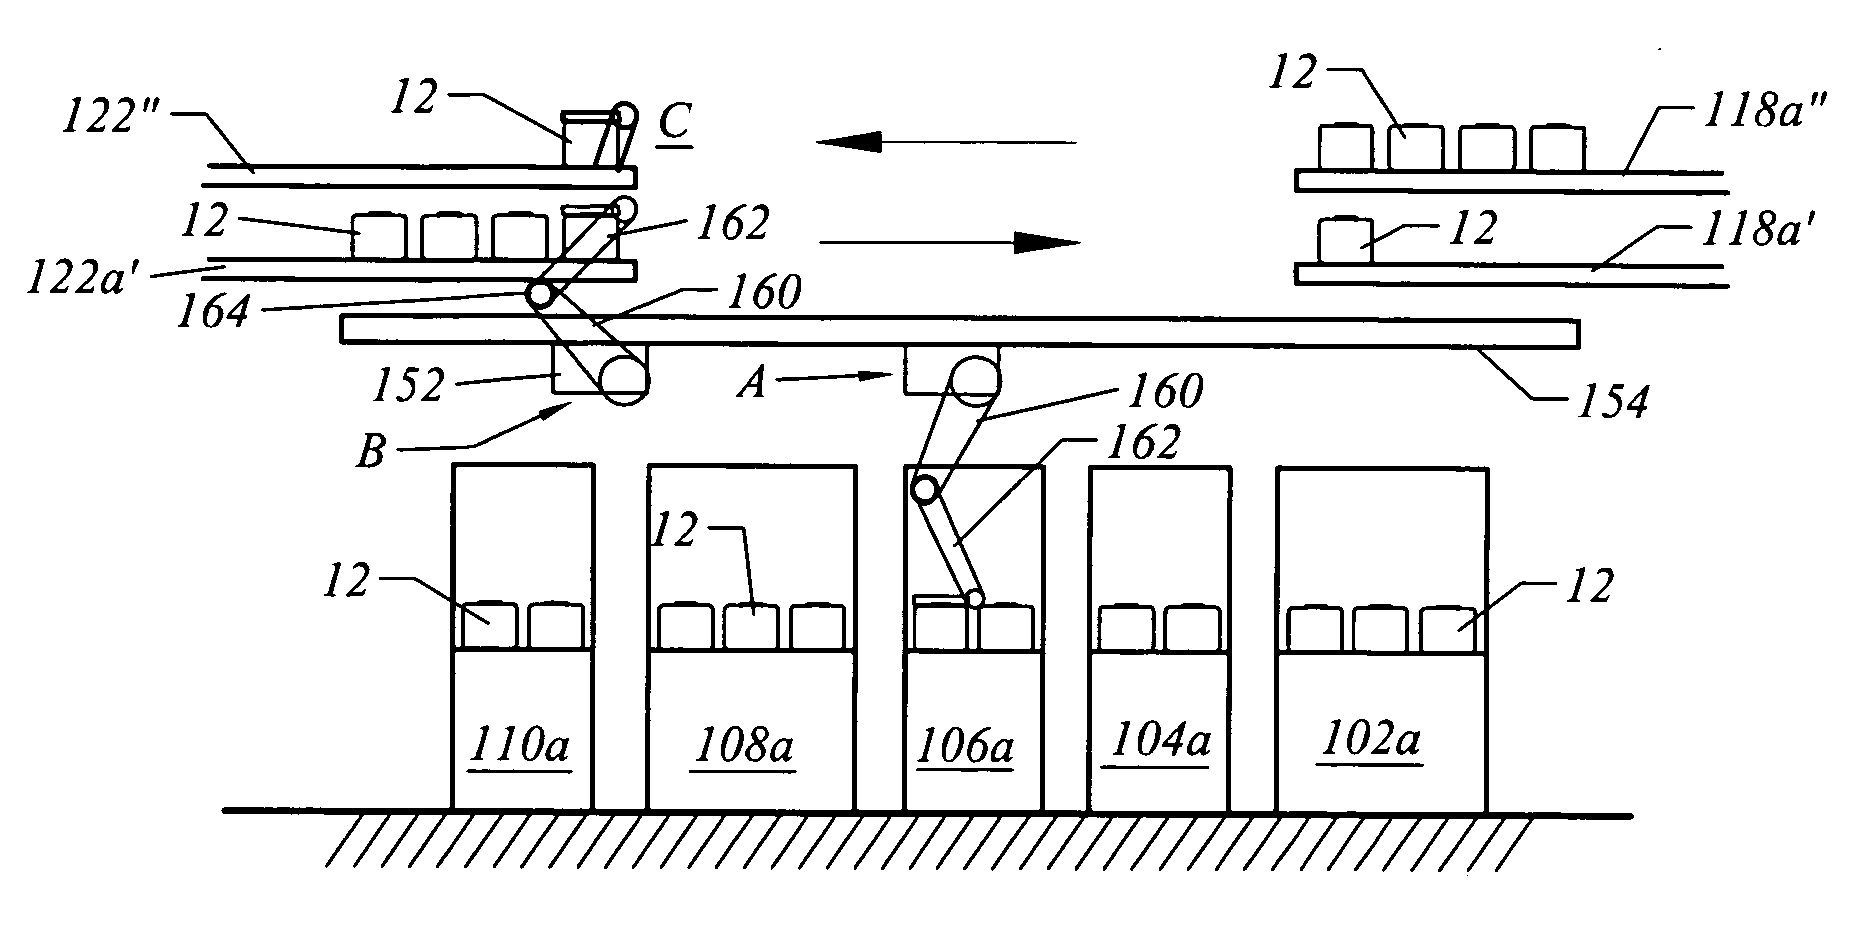 Discontinuous conveyor system